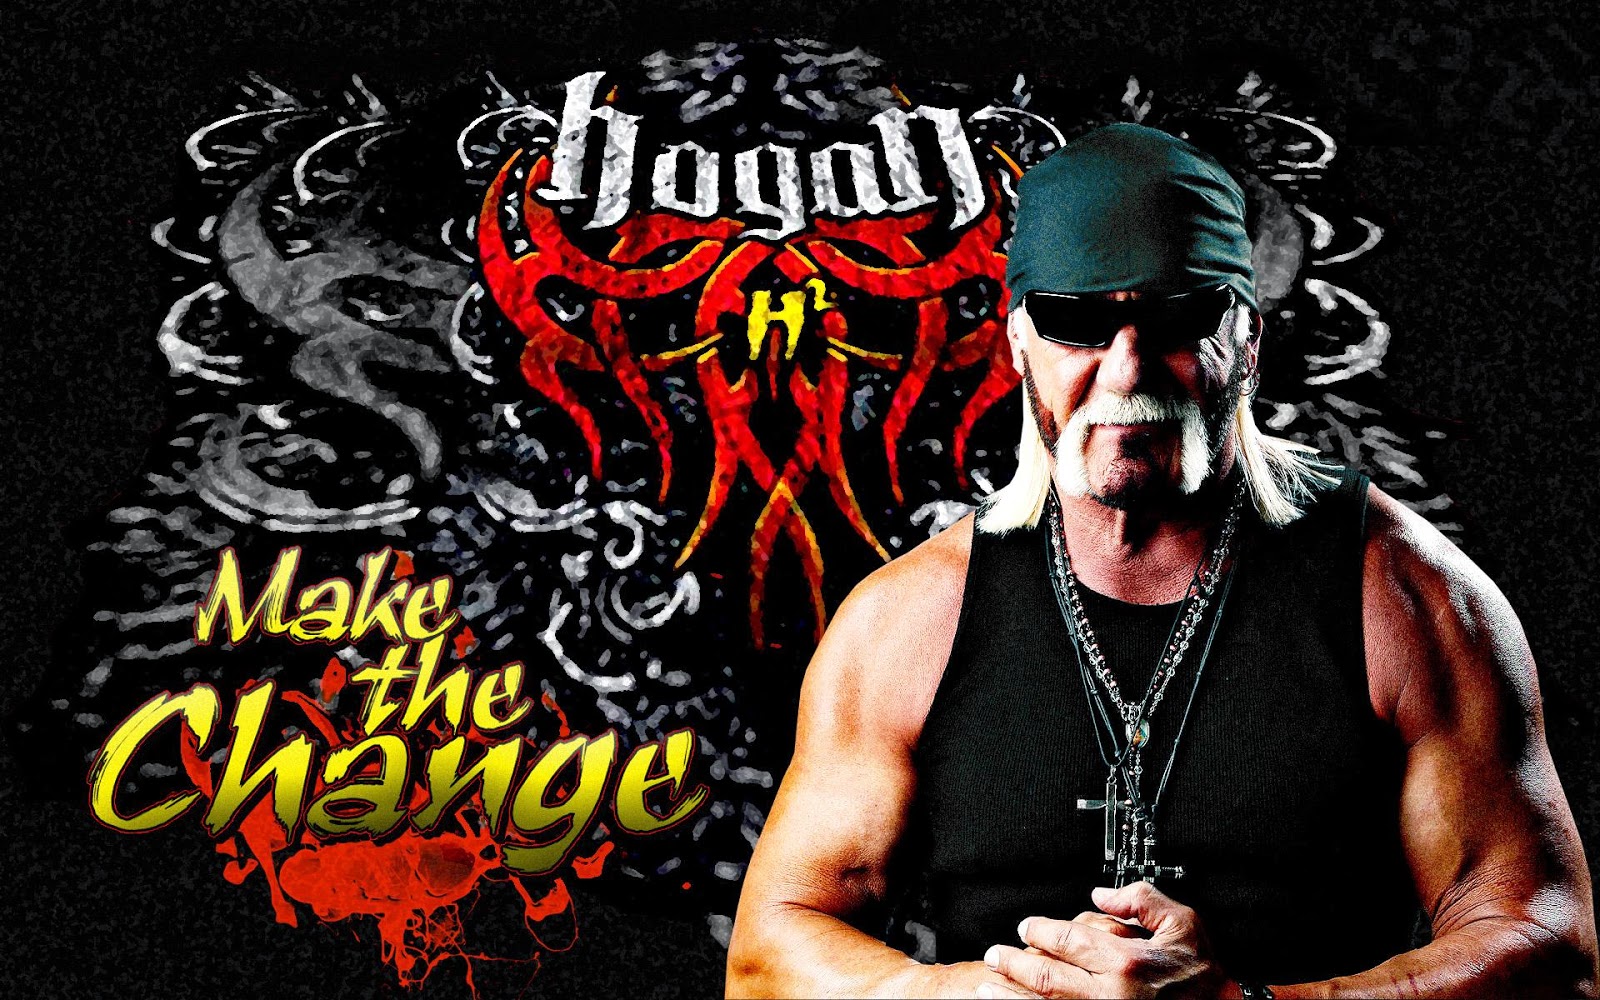 Hulk Hogan HD Wallpaper Wwe